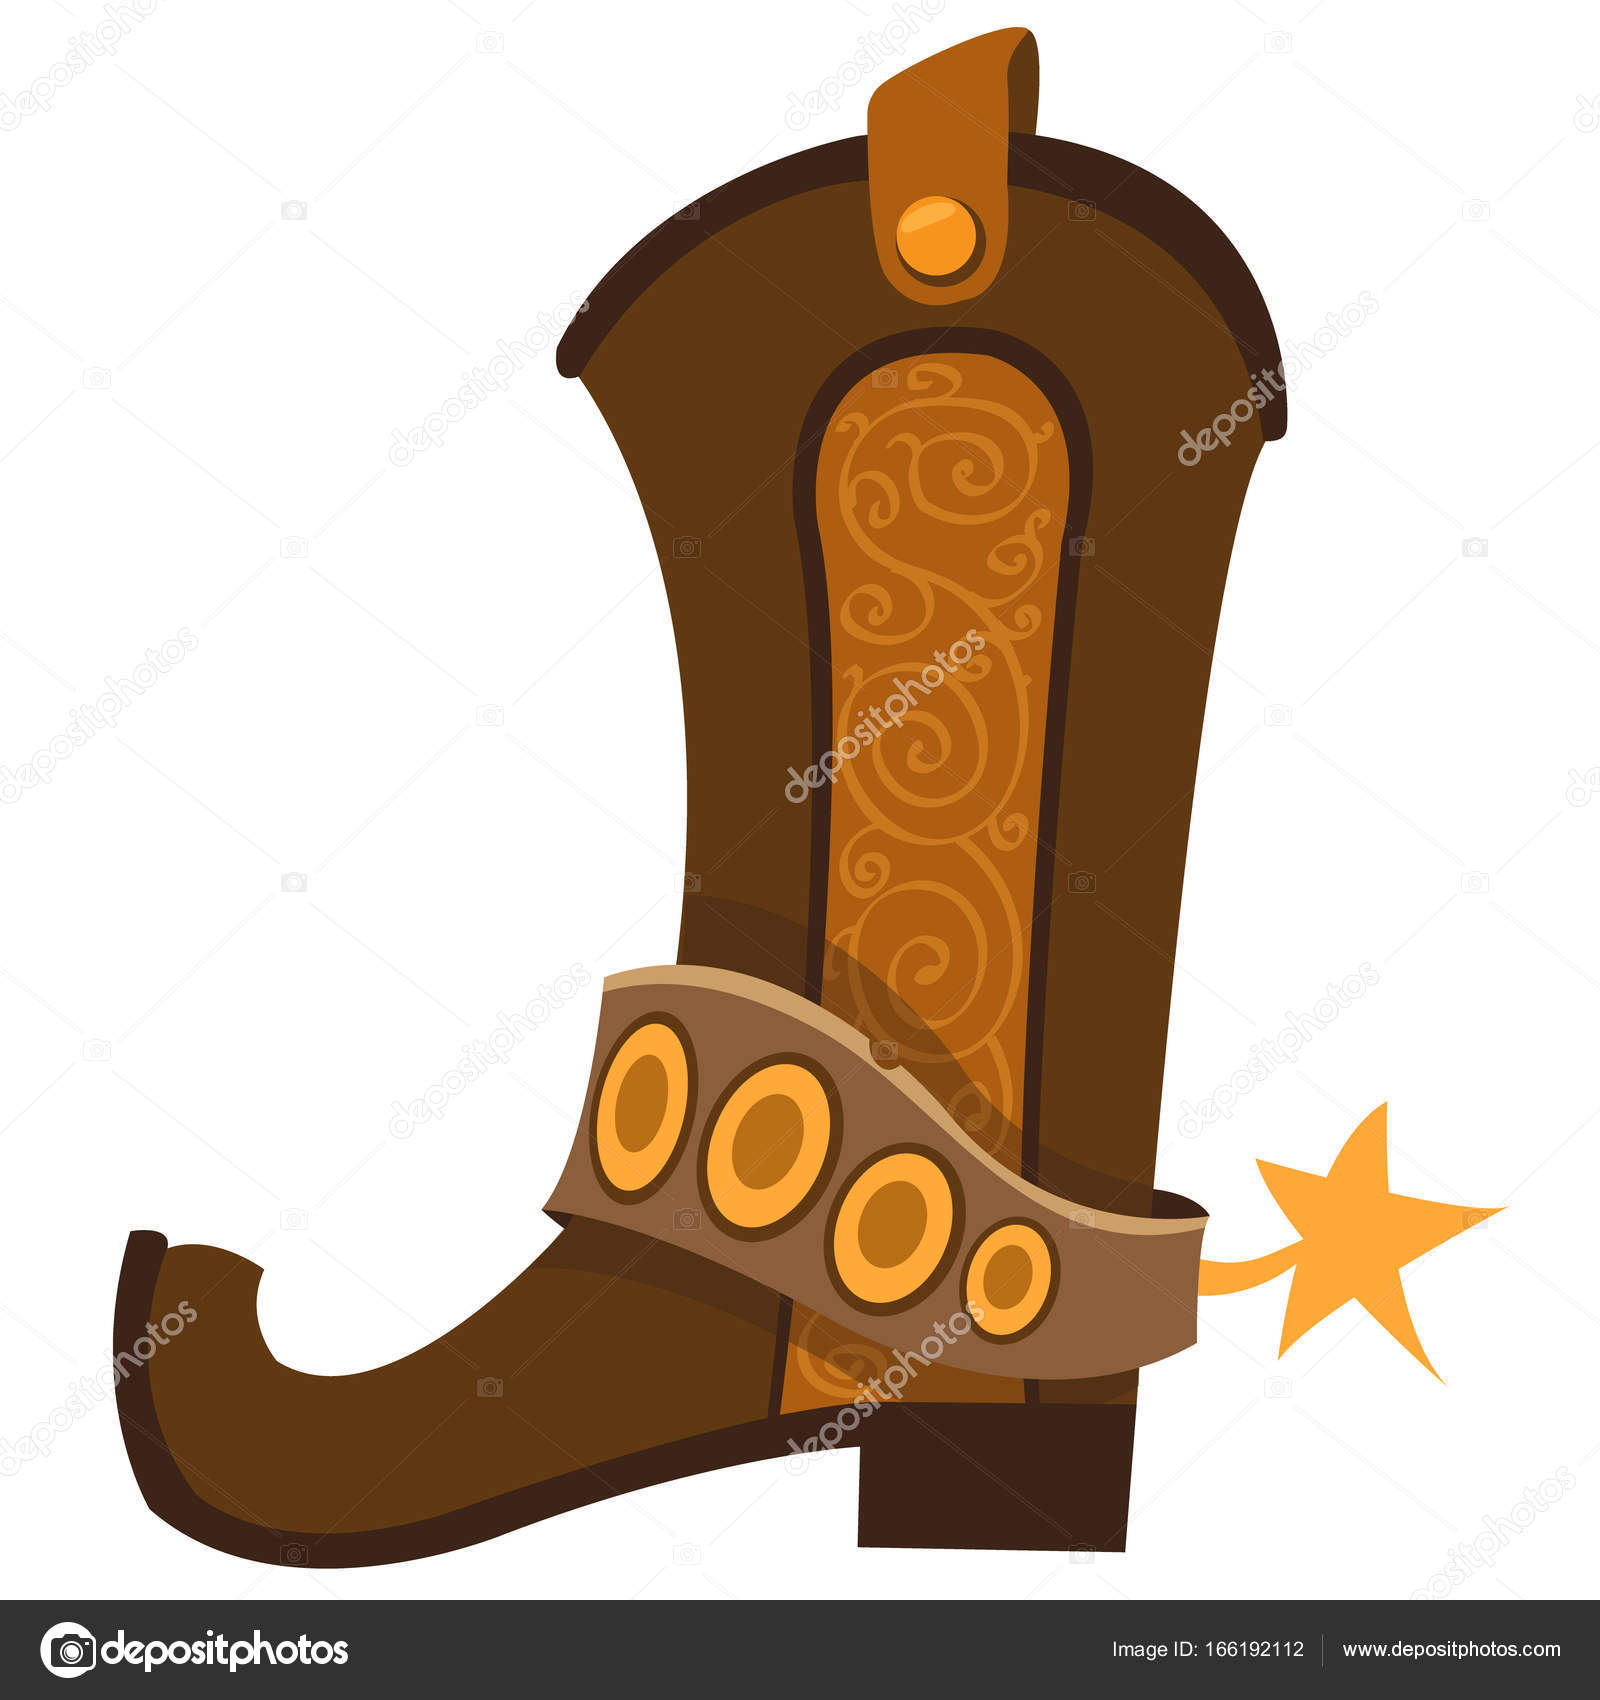 depositphotos 166192112 stock illustration design of boot icon